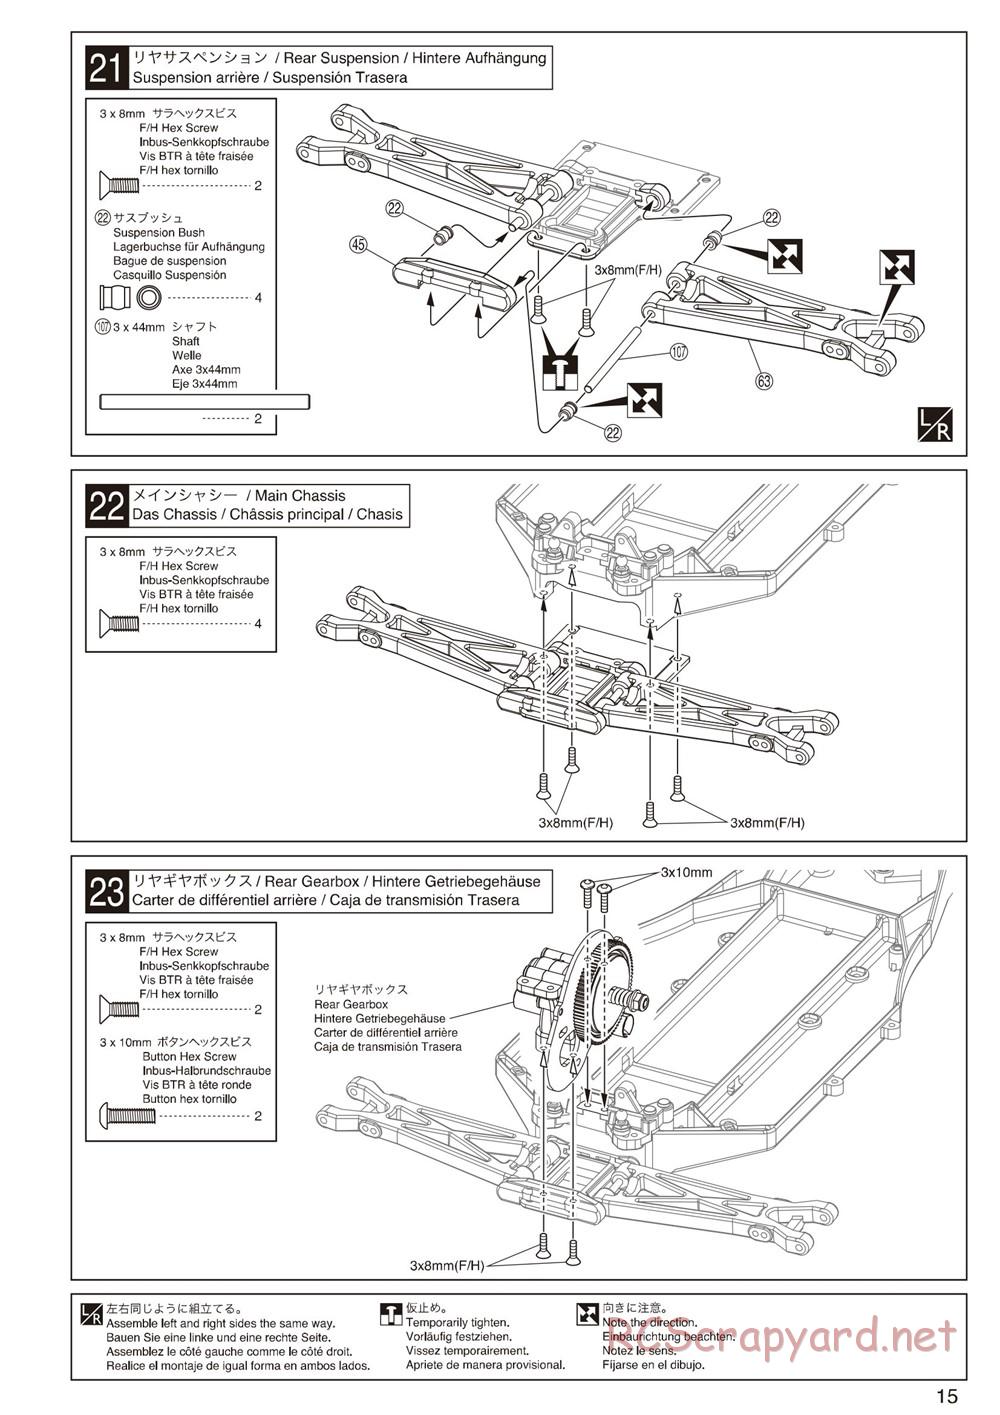 Kyosho - Ultima-SC - Manual - Page 15